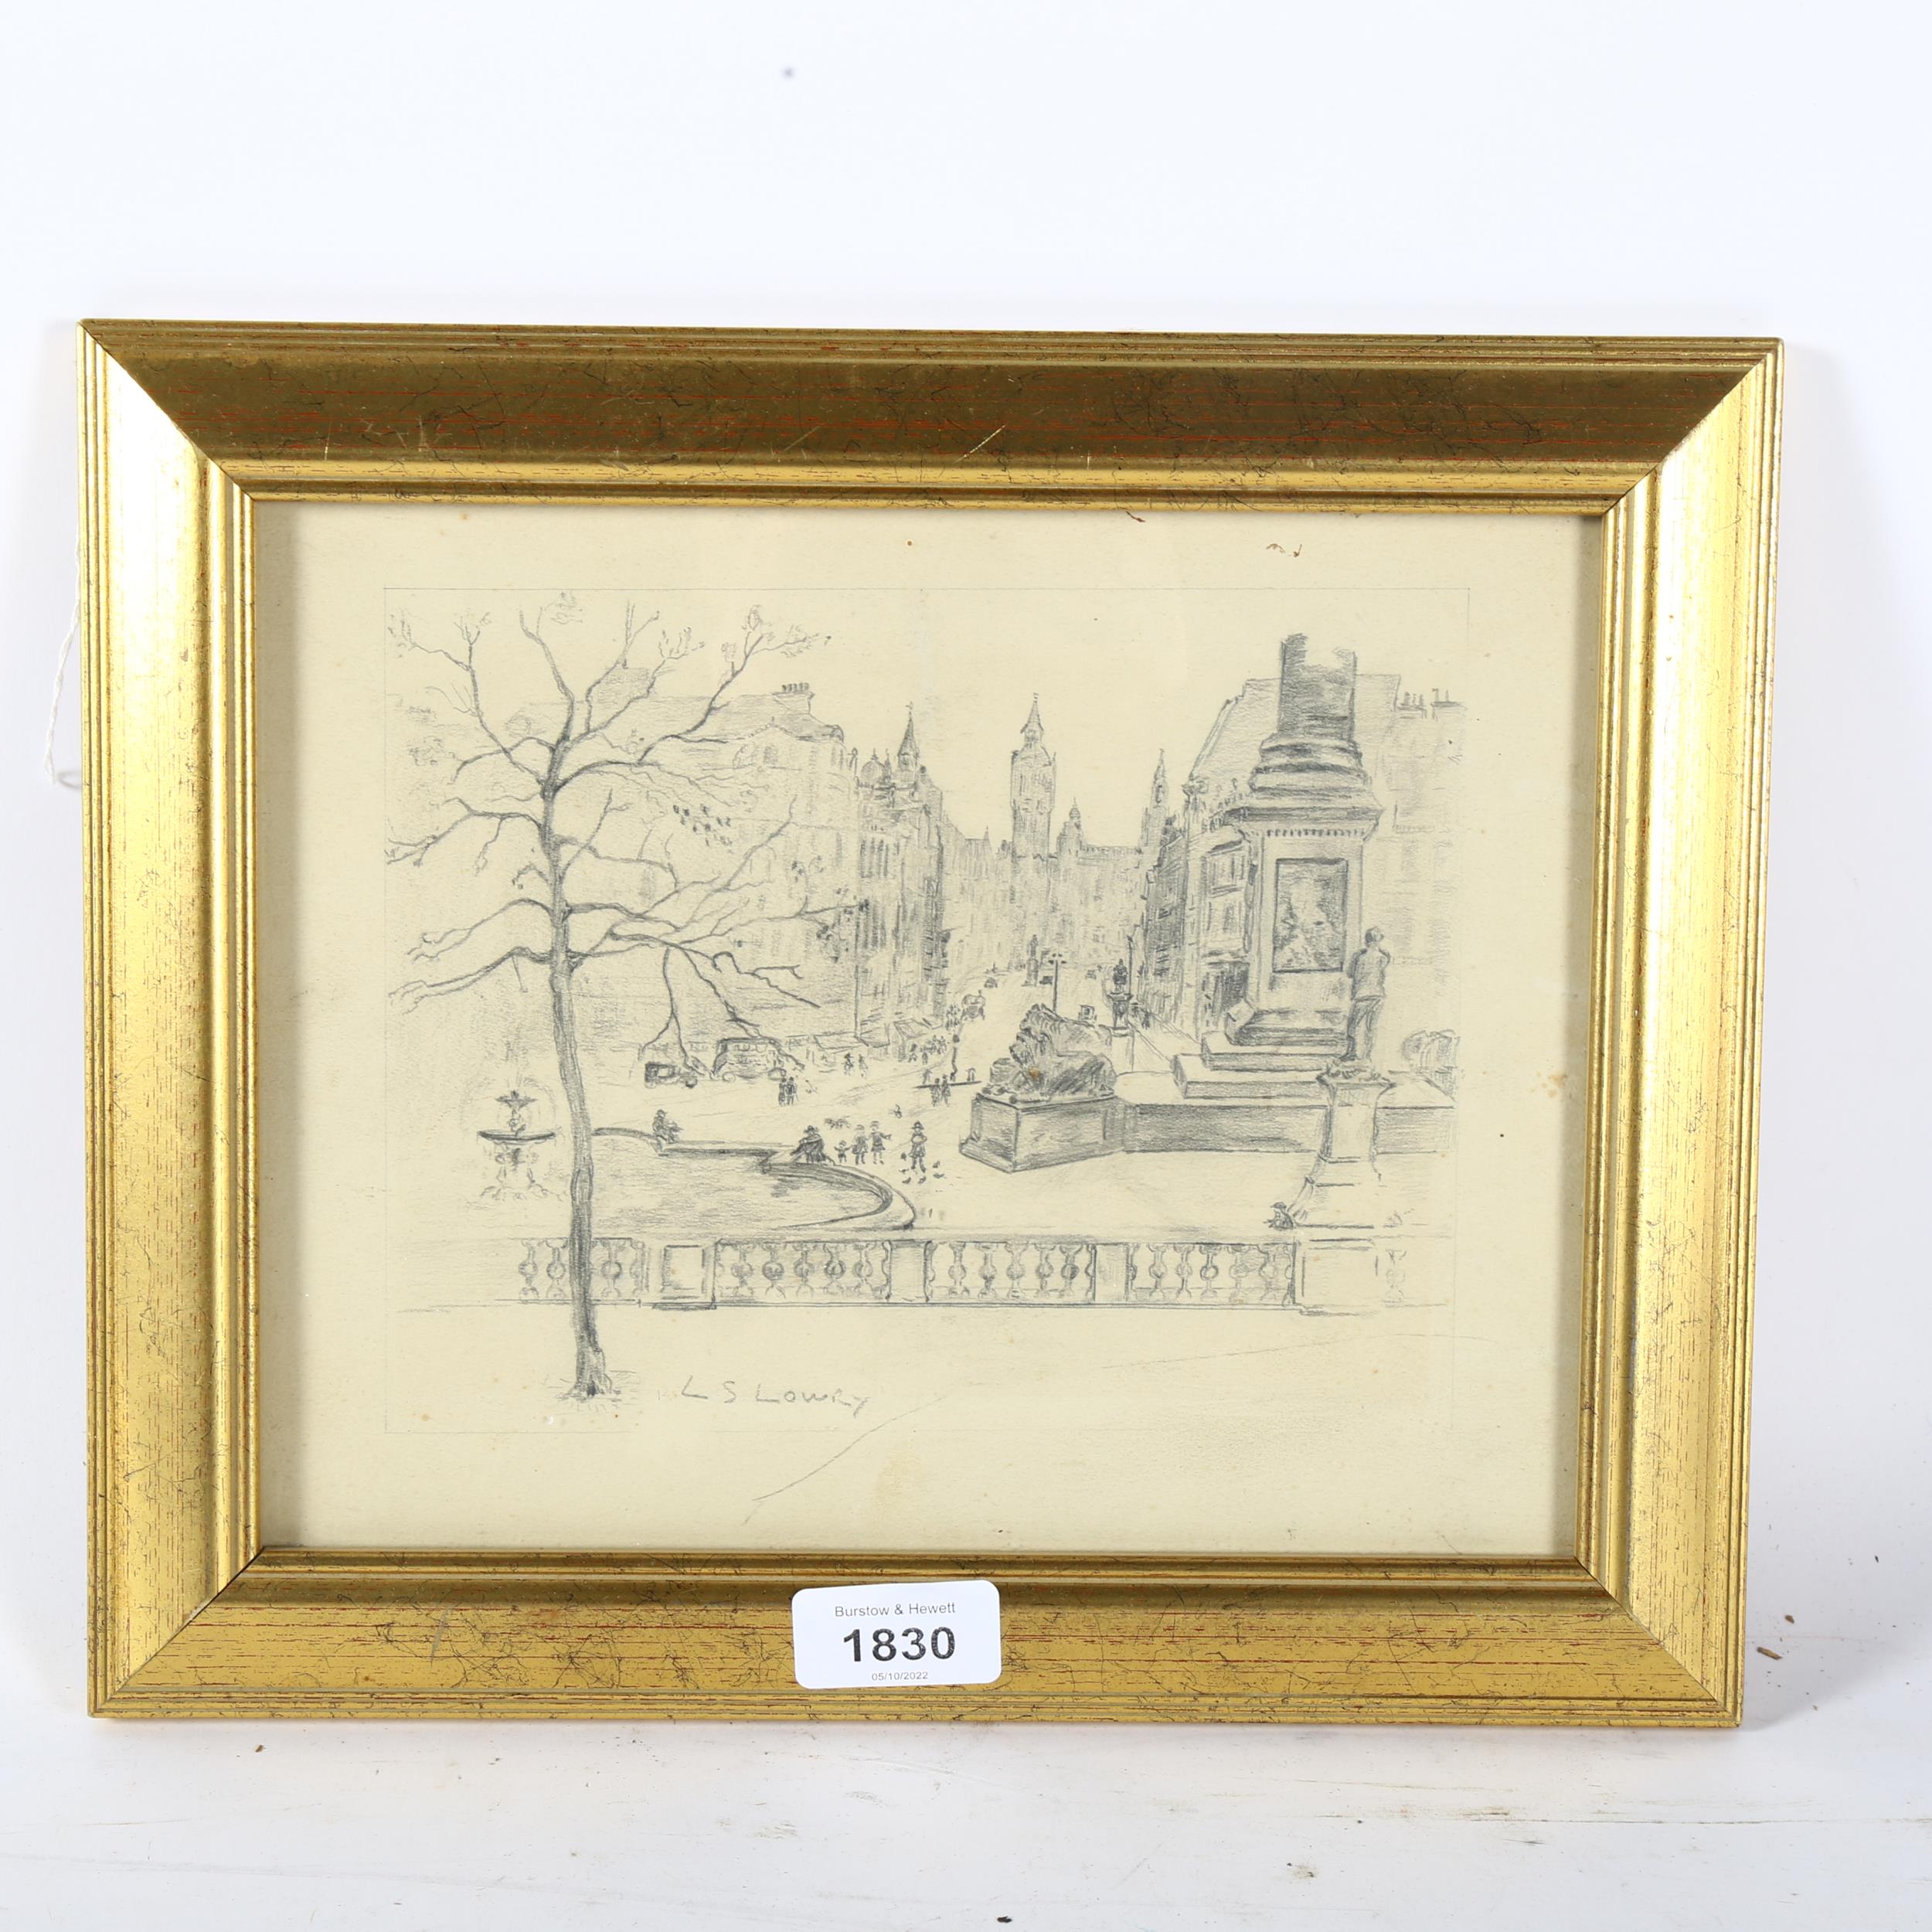 Manner of L S Lowry, pencil drawing, Trafalgar Square London, image 15cm x 20cm, framed A few tiny